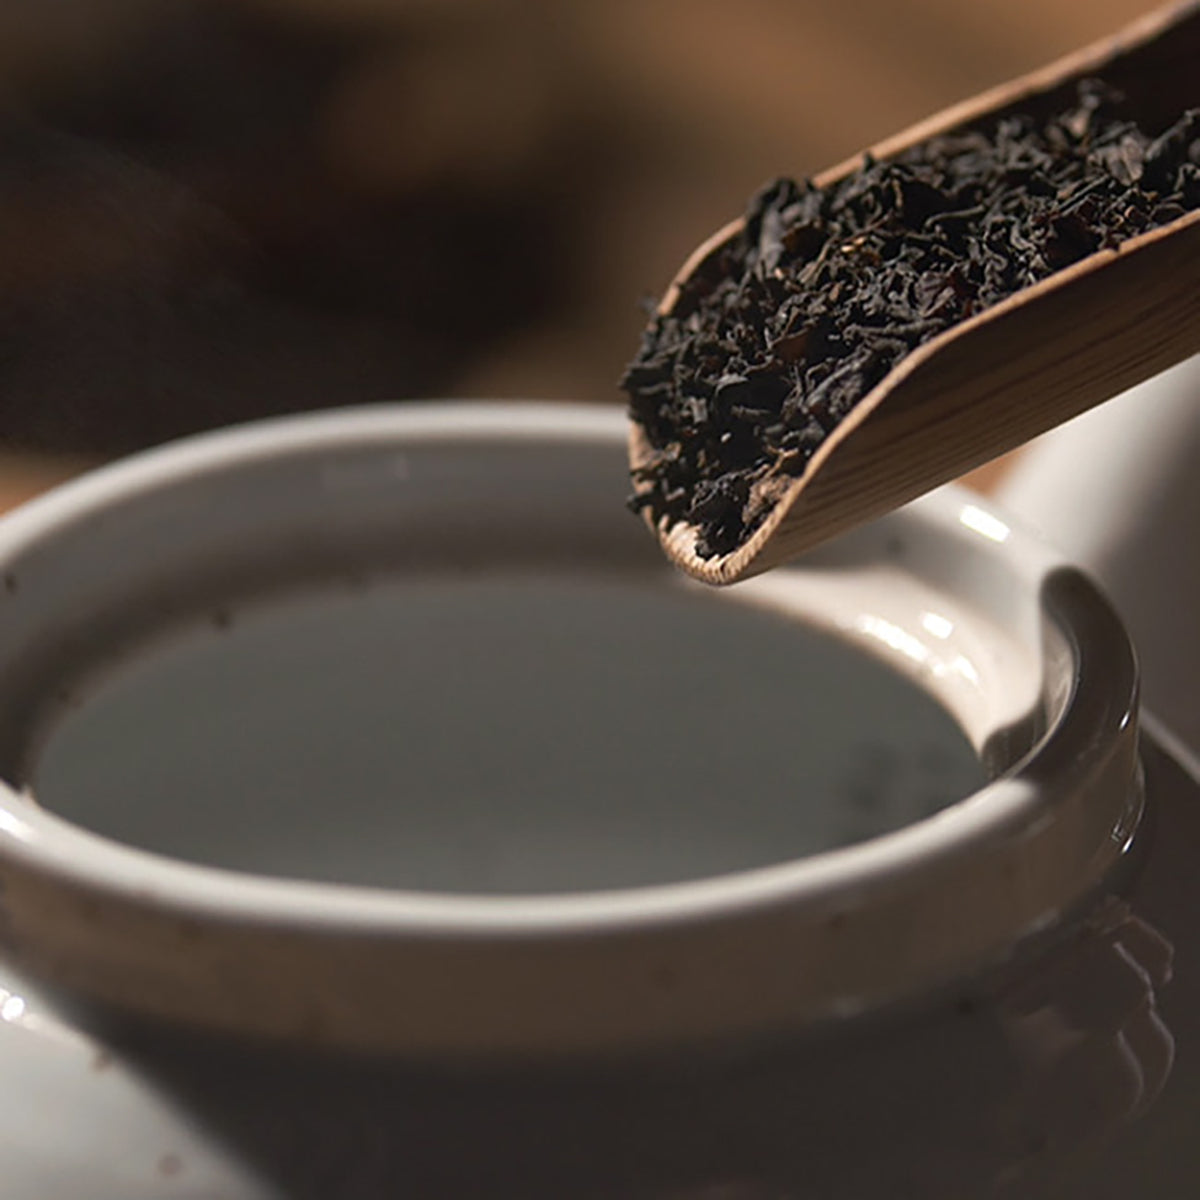 Black Tea Enriched Cream